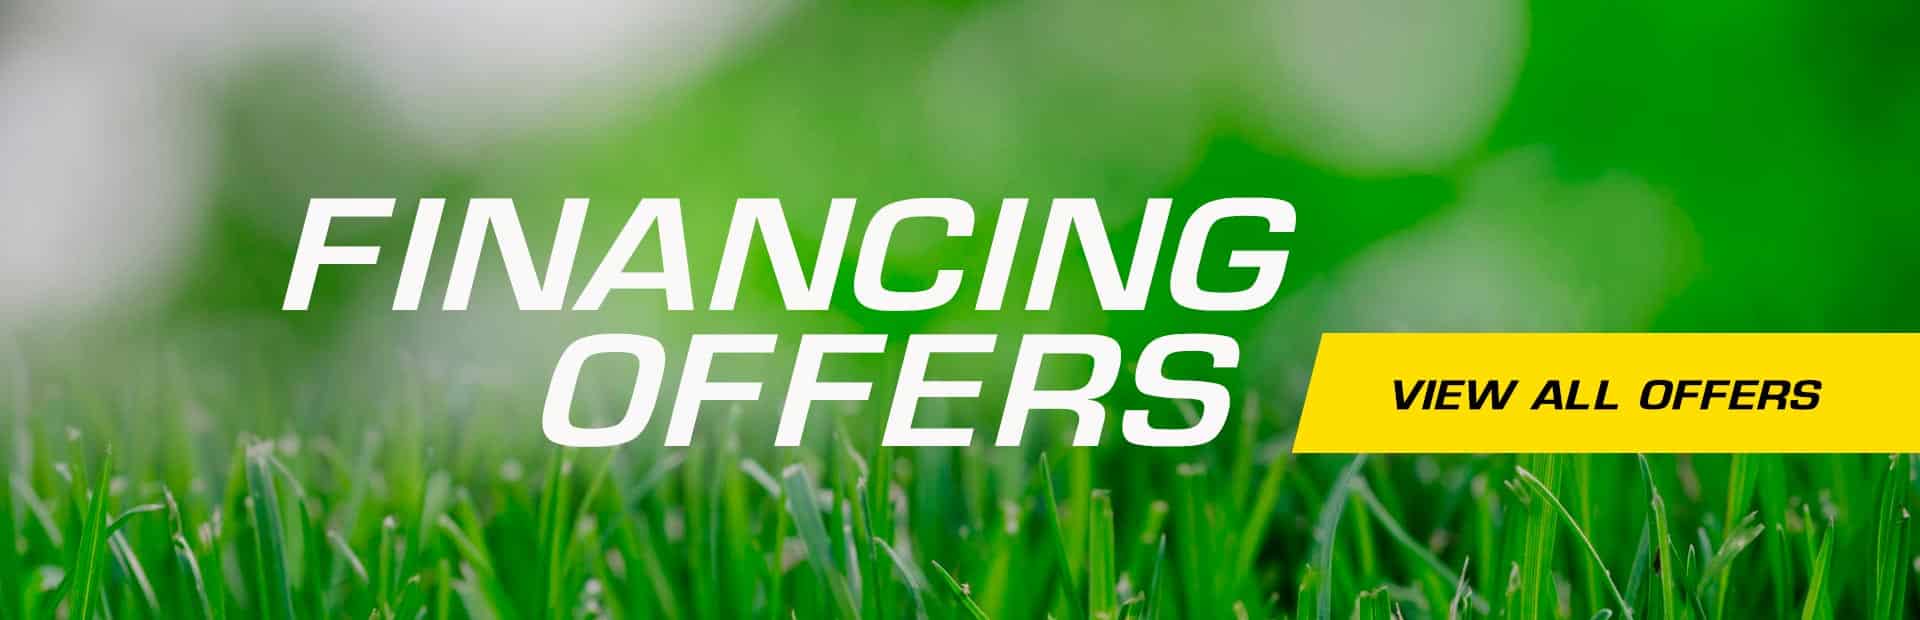 banner-financing-offers.jpg